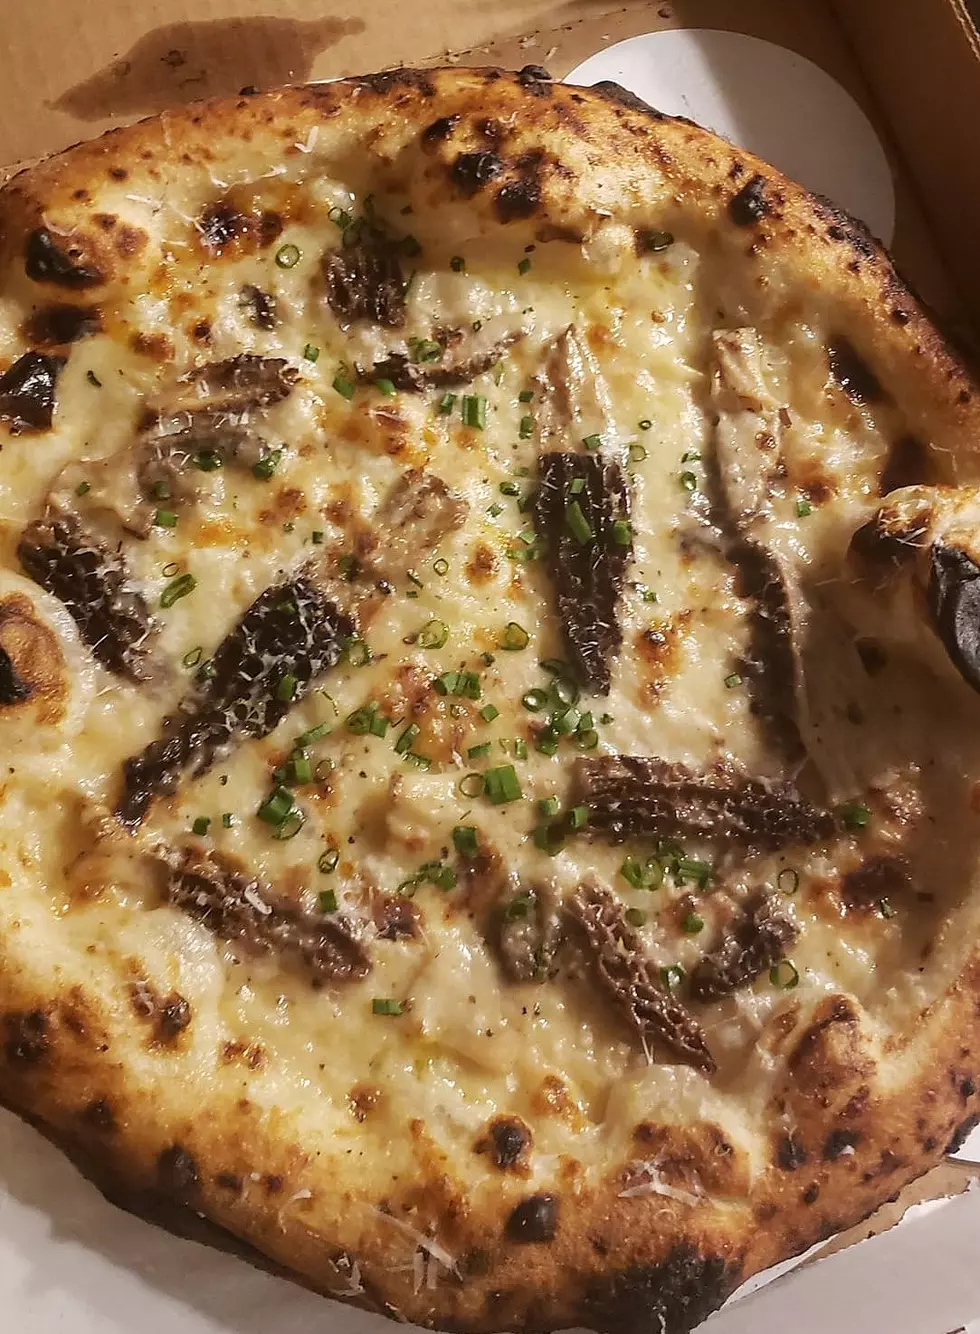 A Mount Vernon Restaurant is Selling Morel Mushroom Pizza